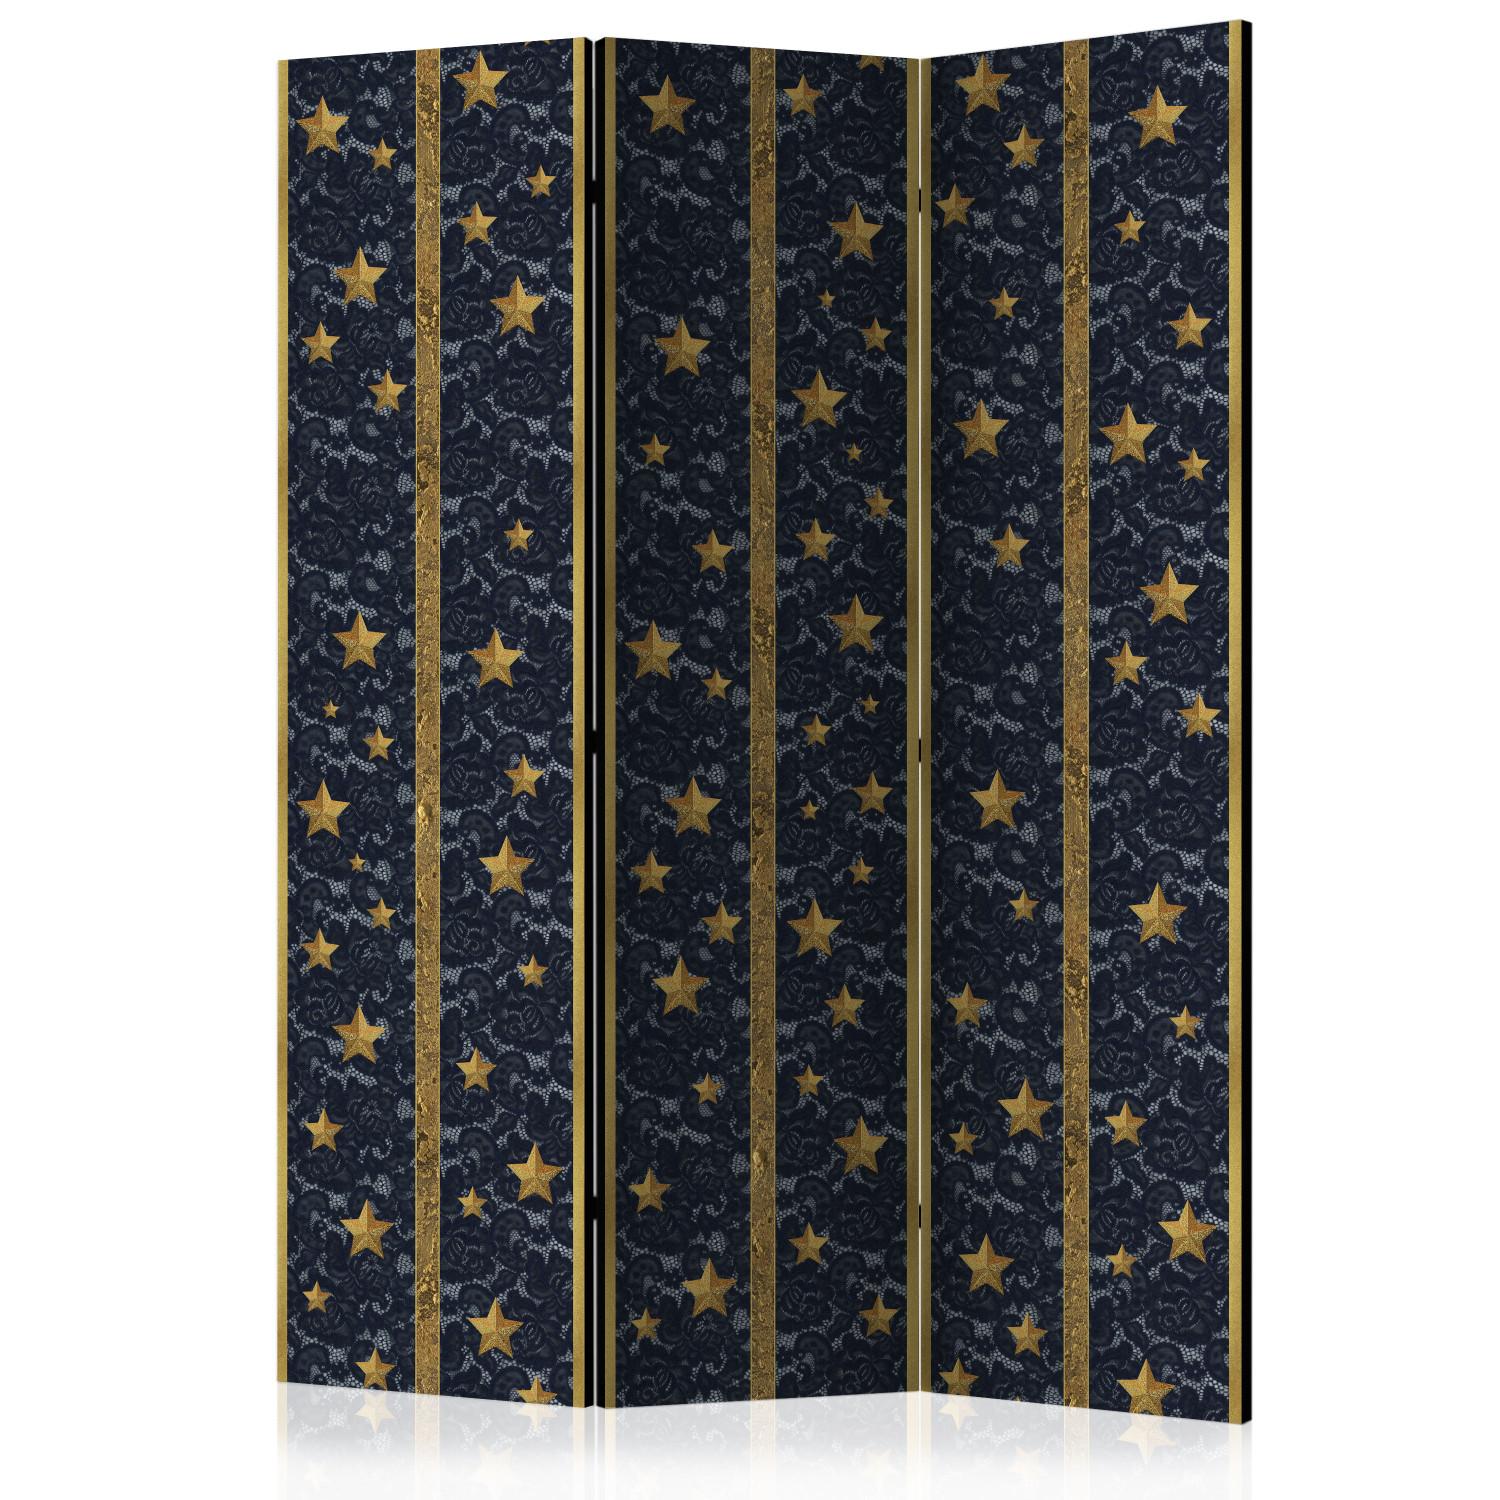 Biombo decorativo Lace Constellation [Room Dividers]